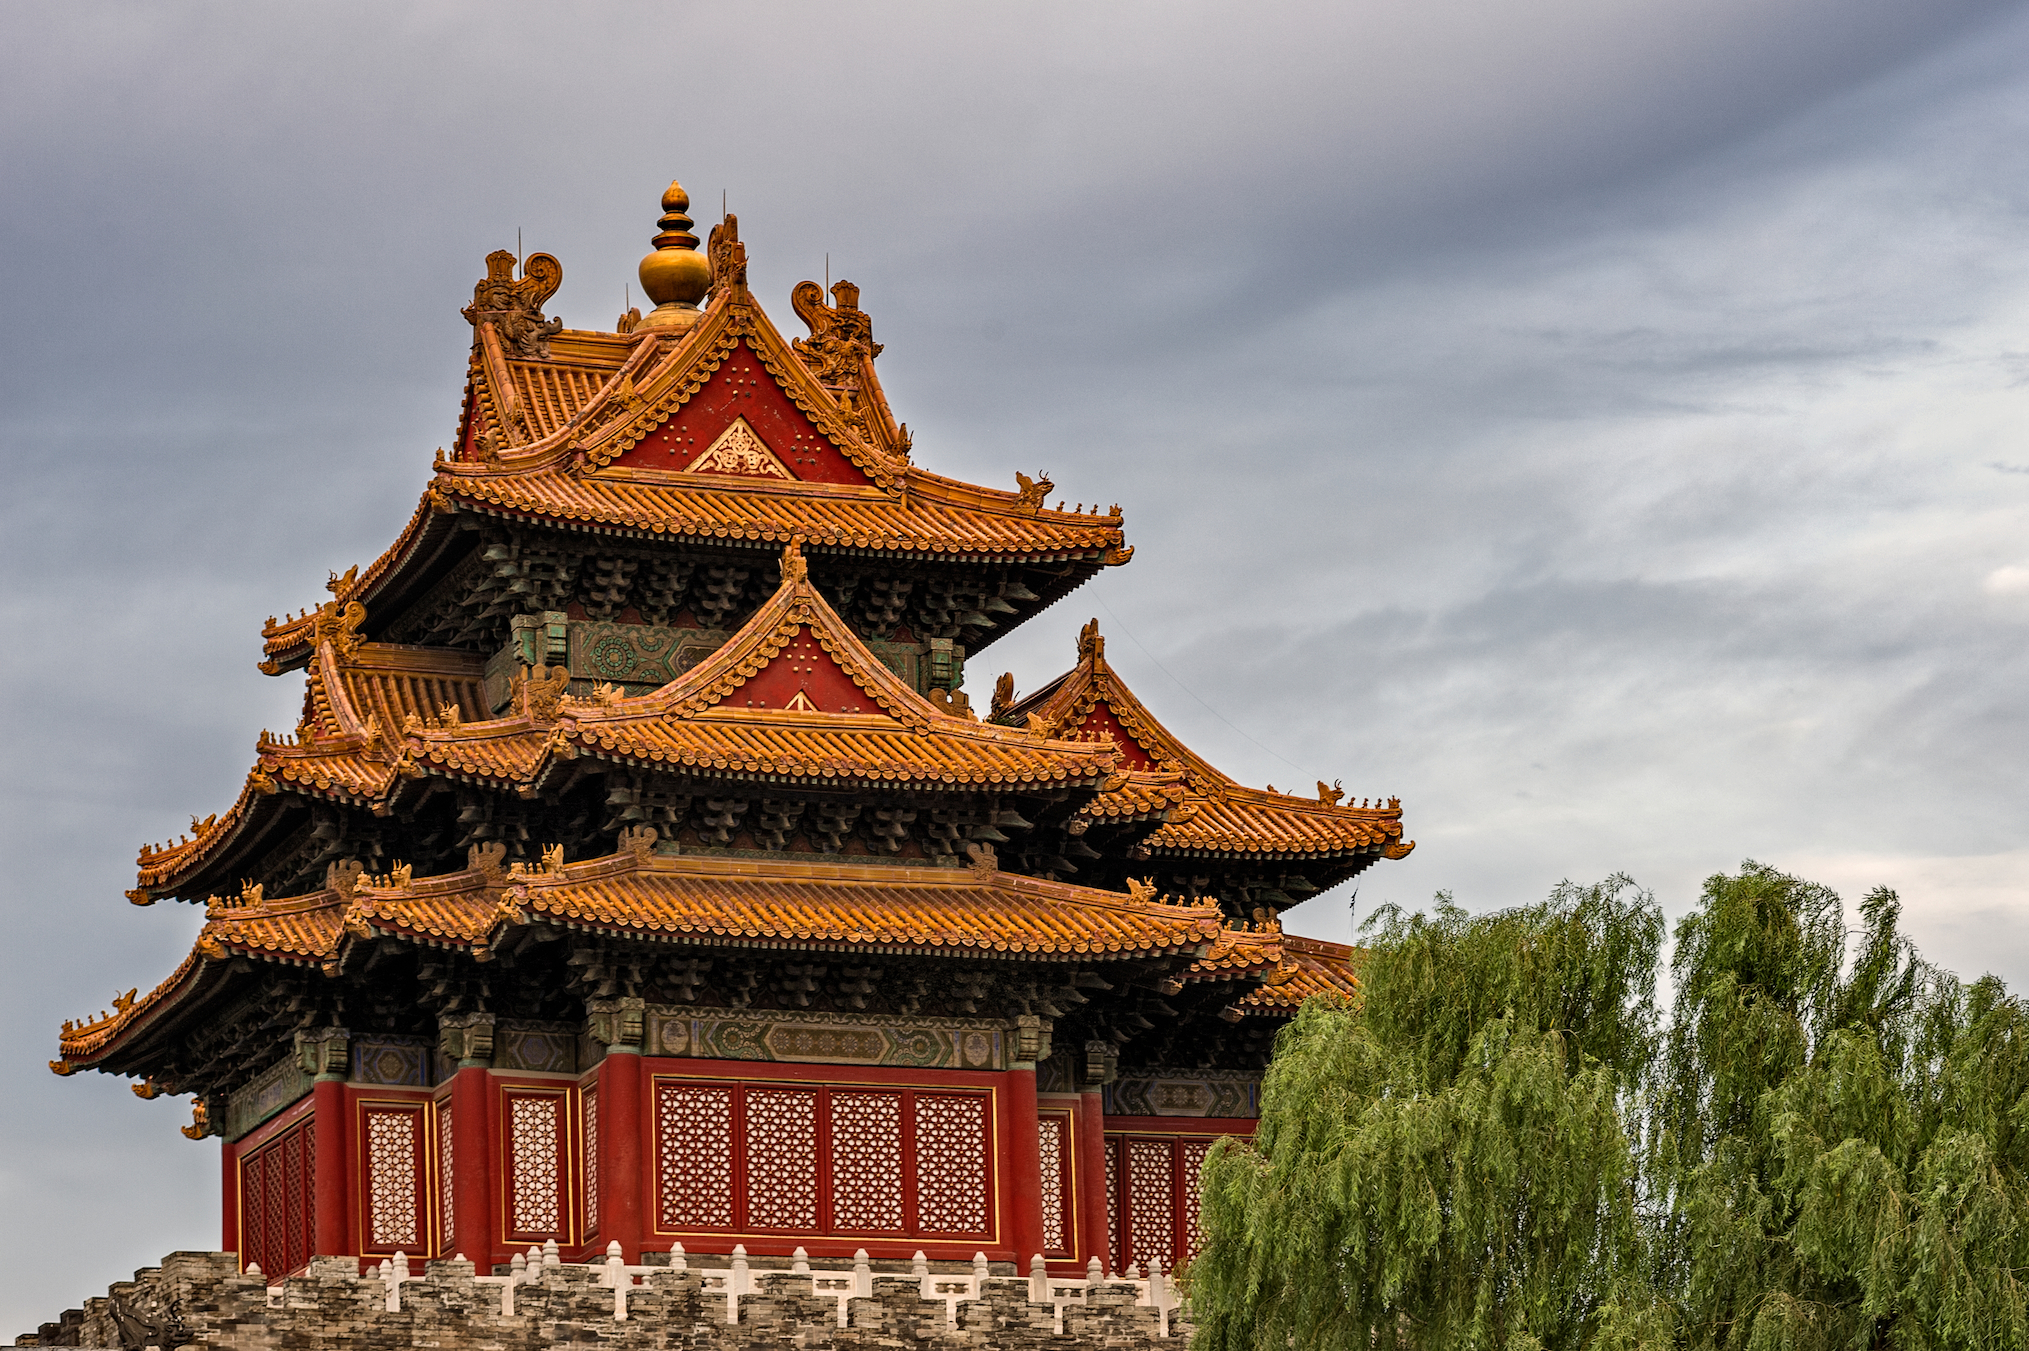 RLC_5946_Forbidden City - 2009